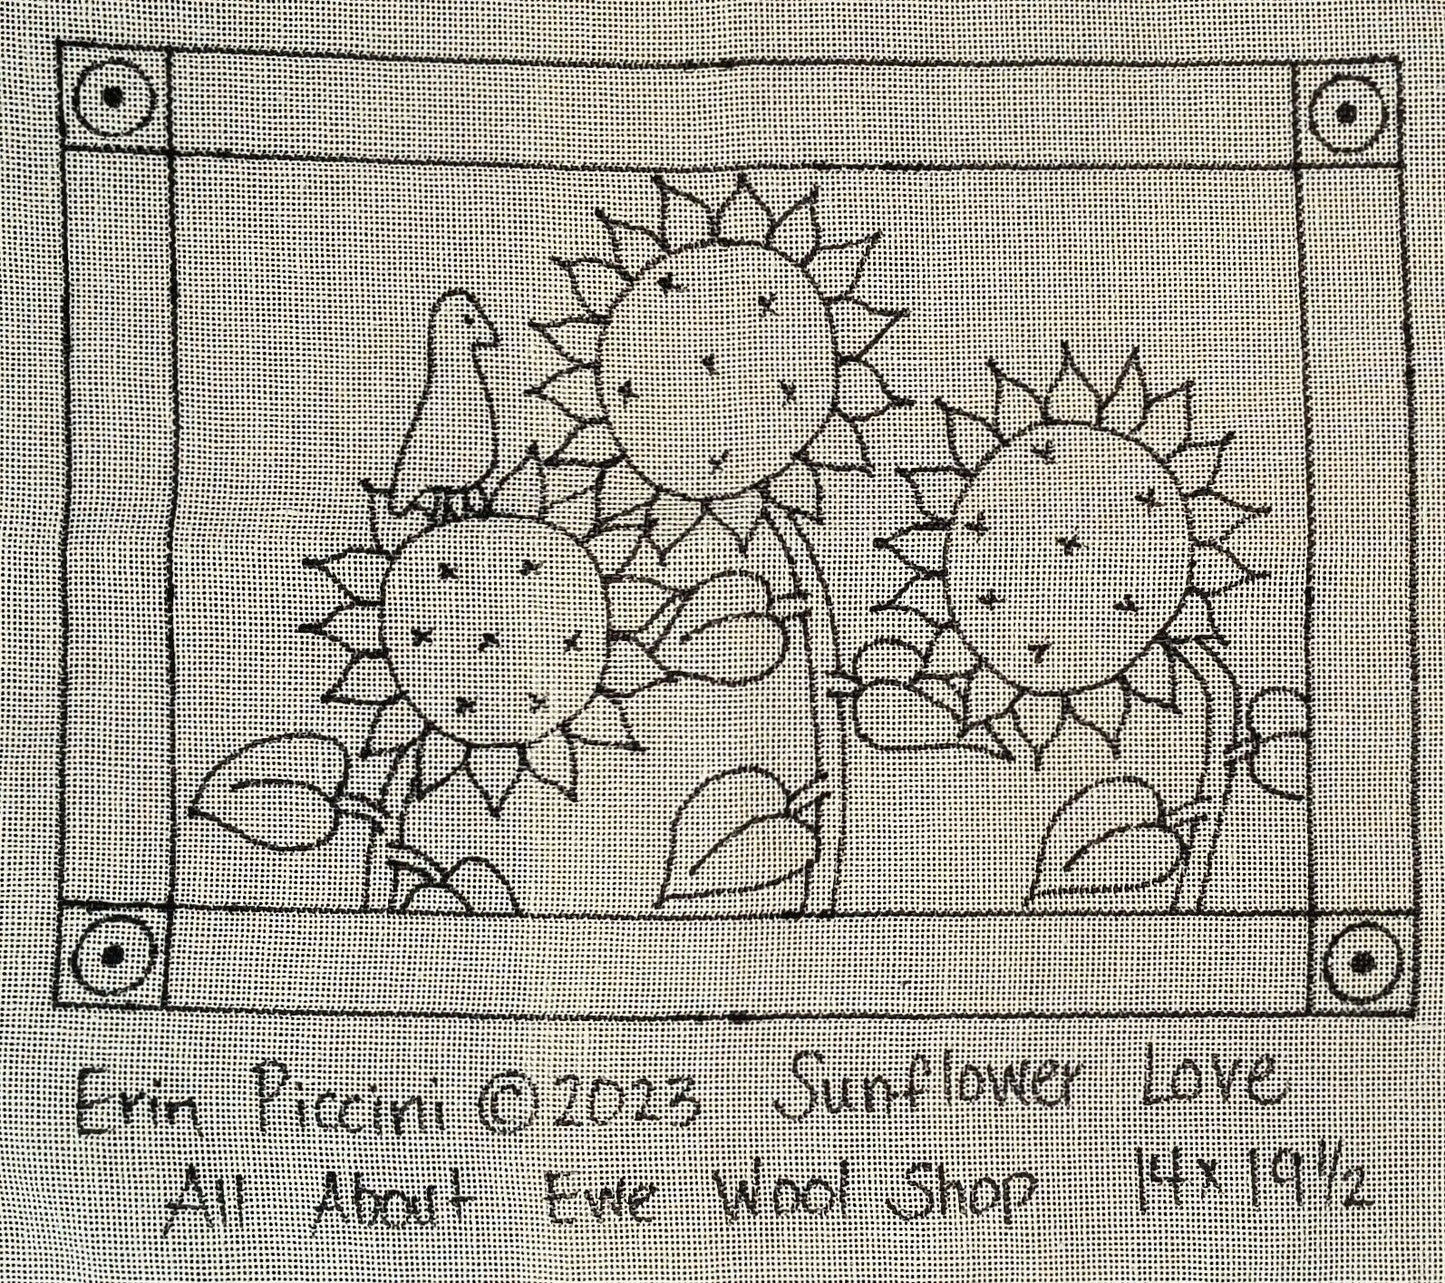 SUNFLOWER LOVE Pattern - All About Ewe Wool Shop